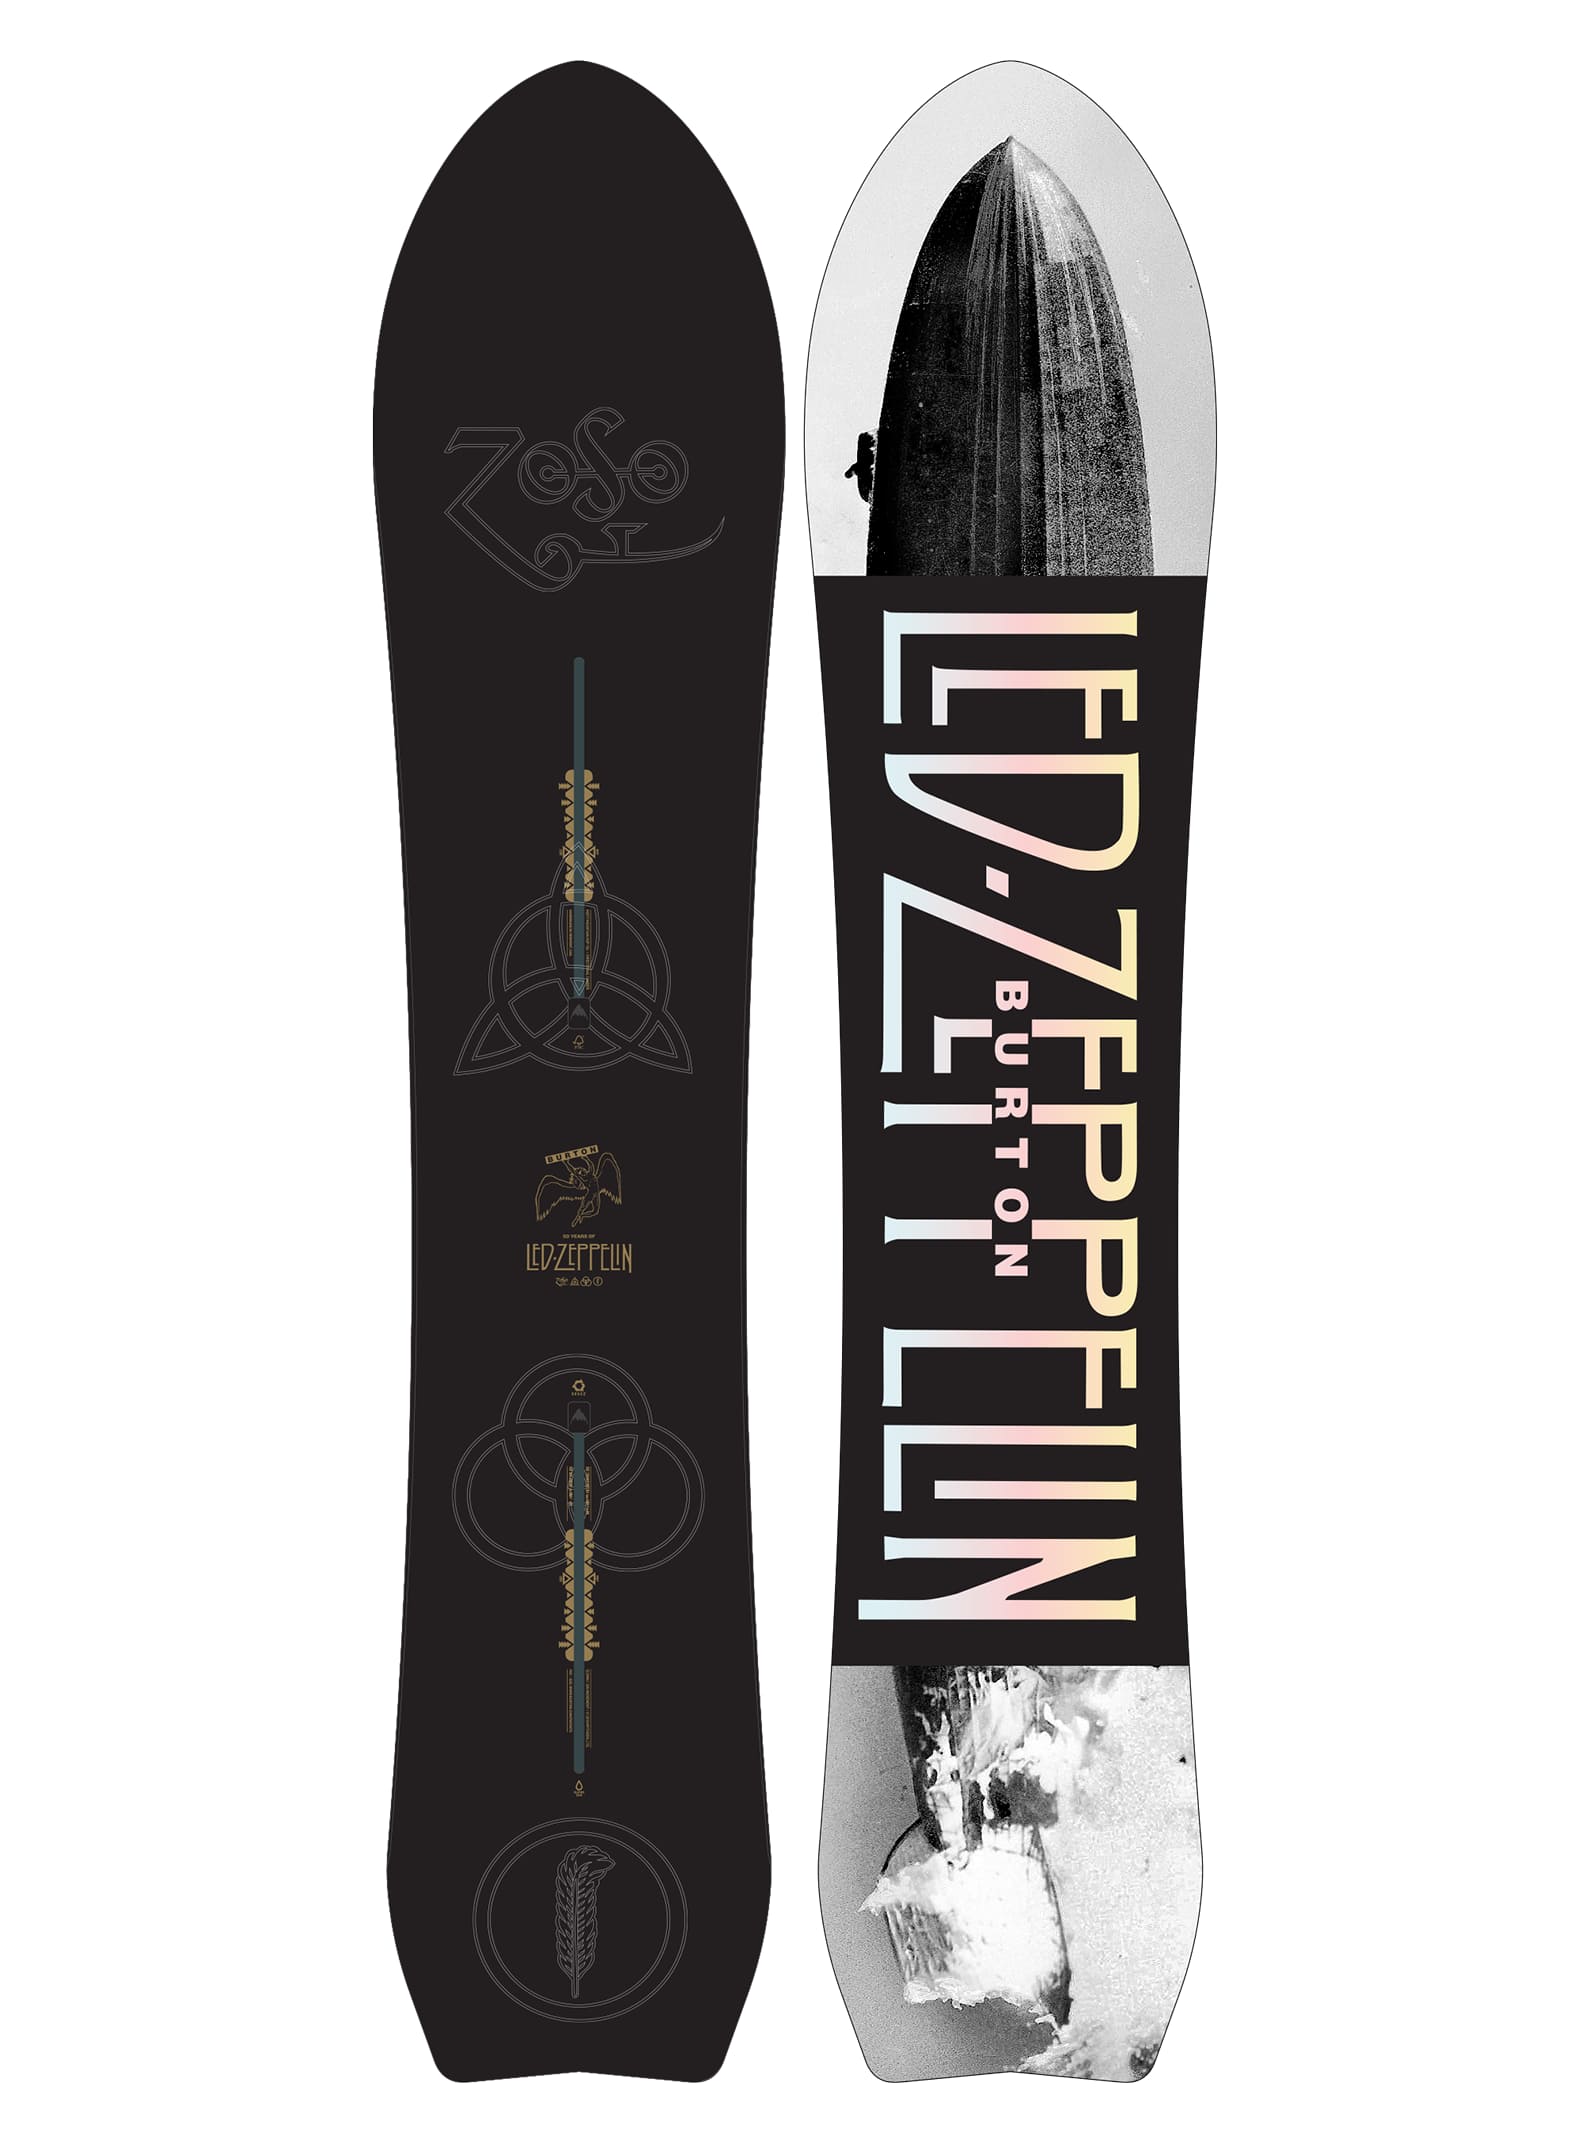 Overleg Wapenstilstand Handig Men's Led Zeppelin x Burton Misty Mountain Hop Snowboard | Burton.com US